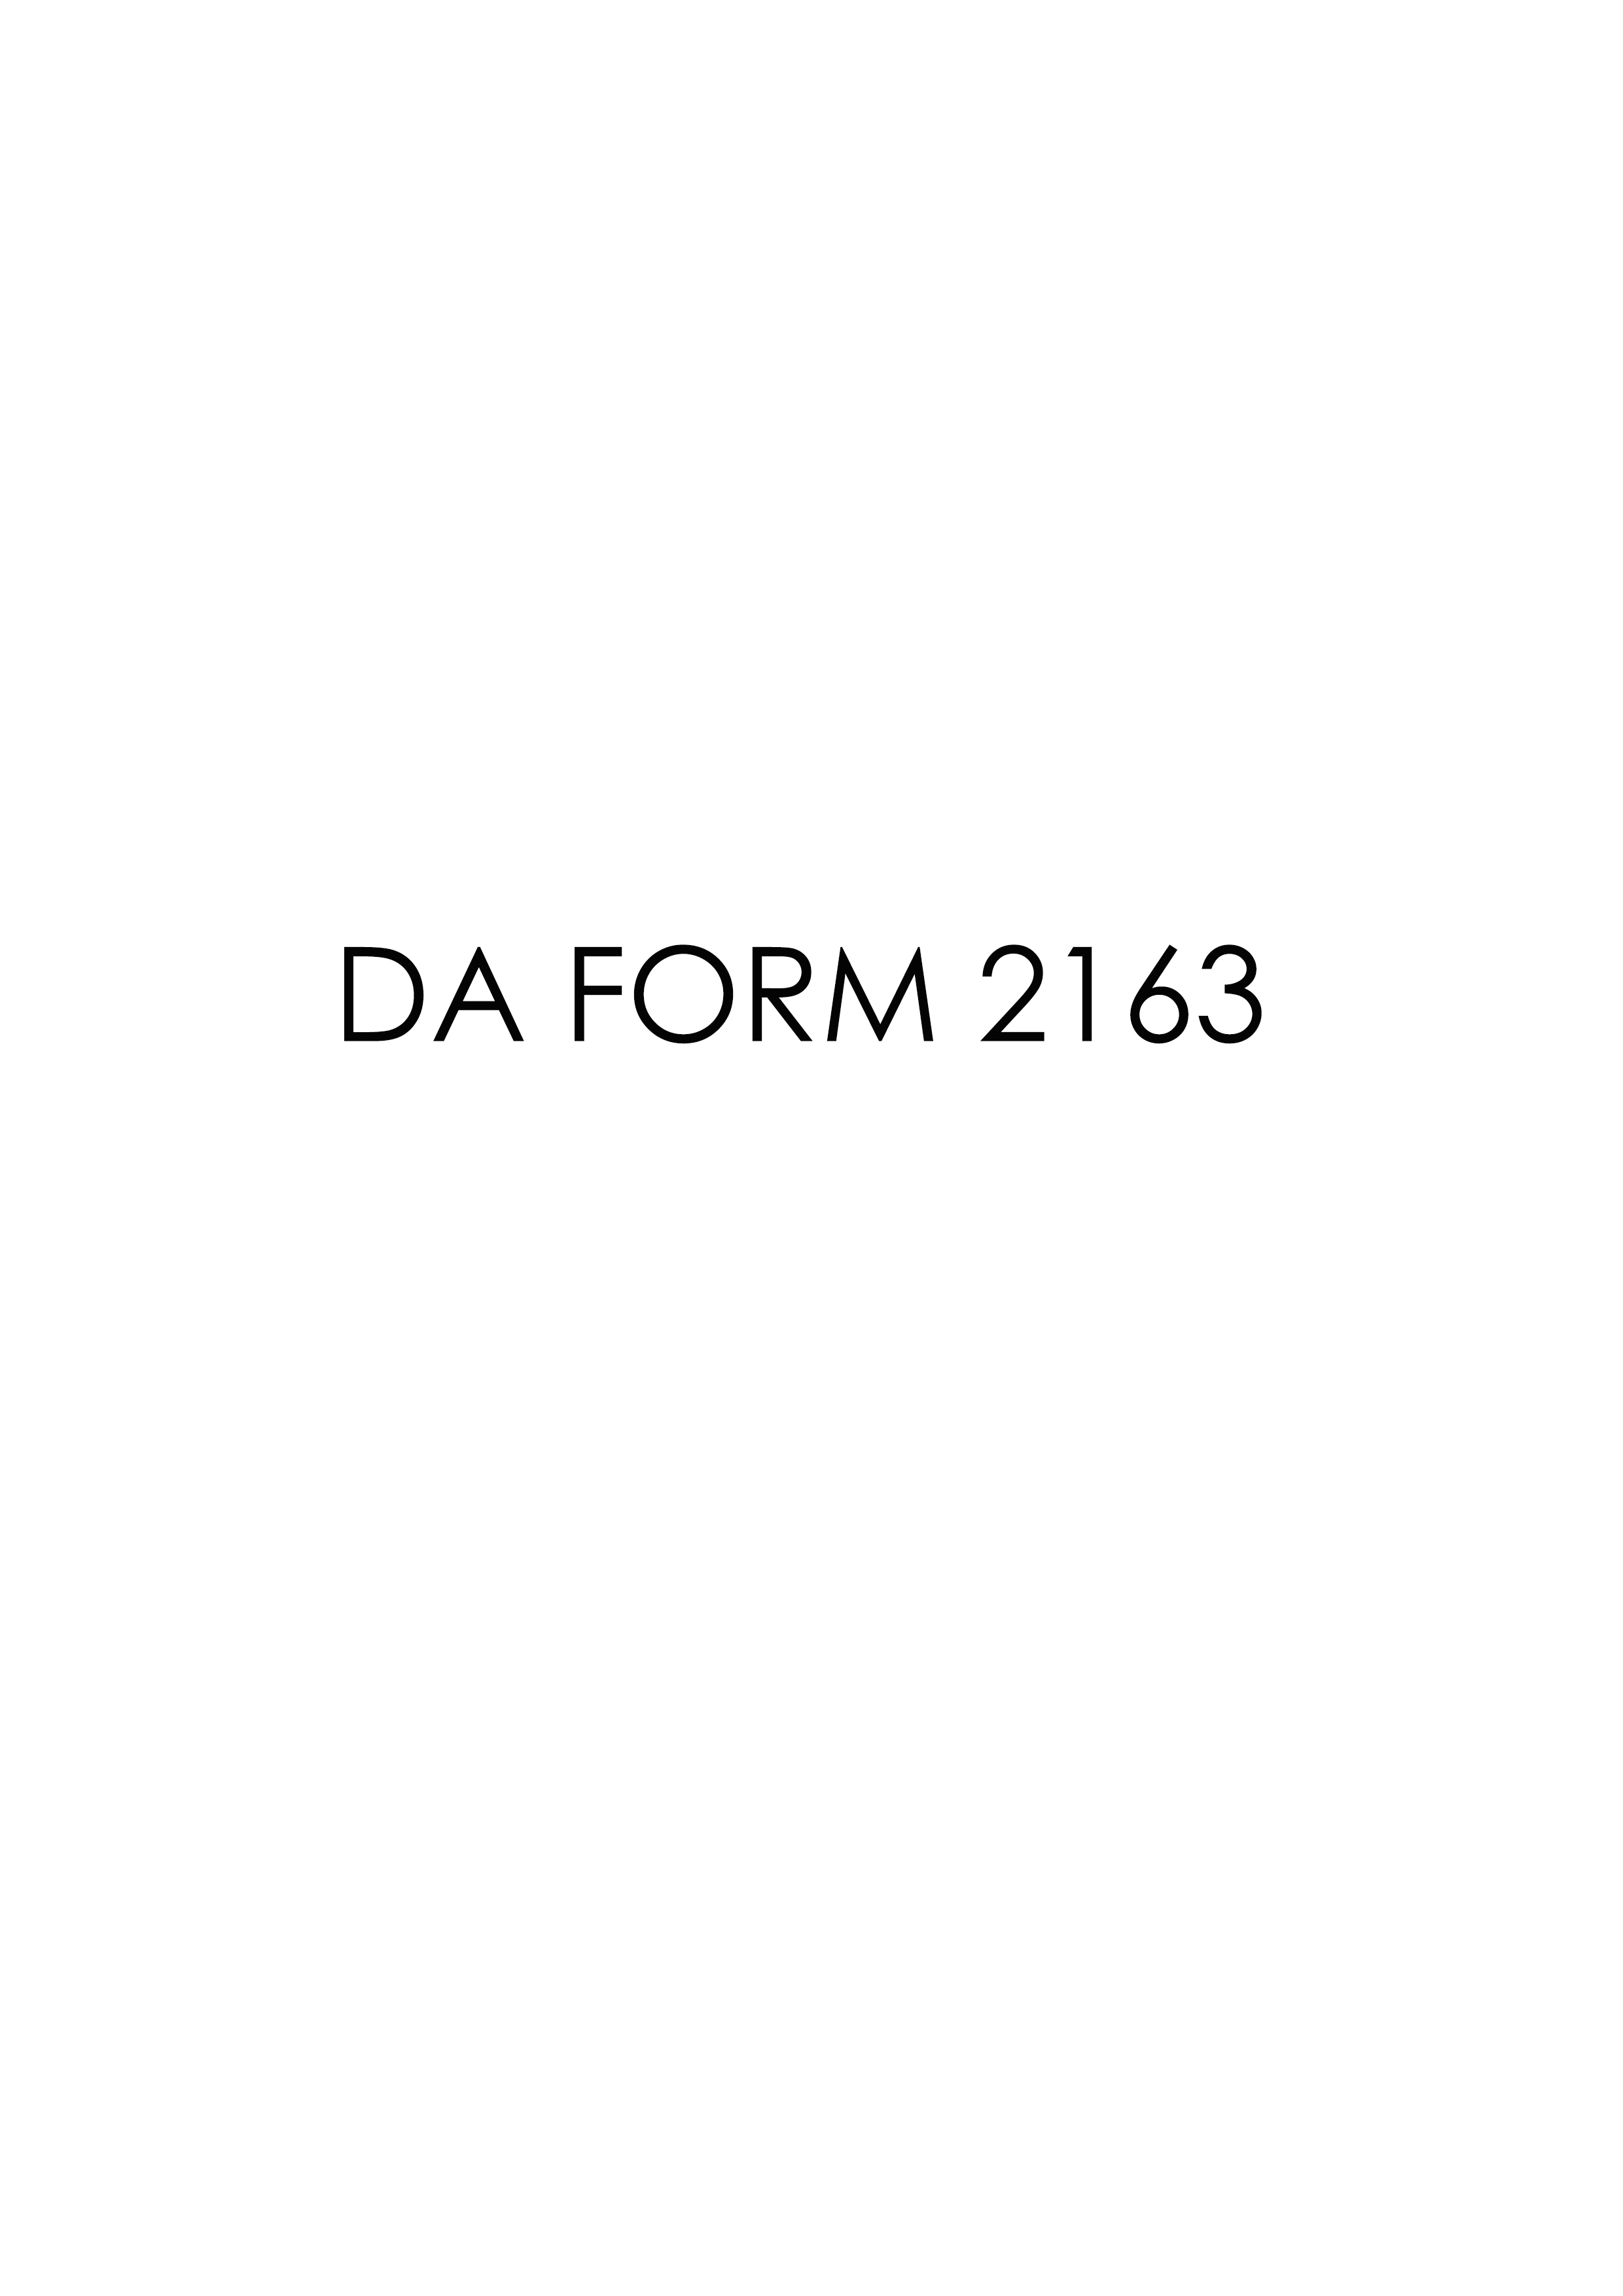 da Form 2163 fillable